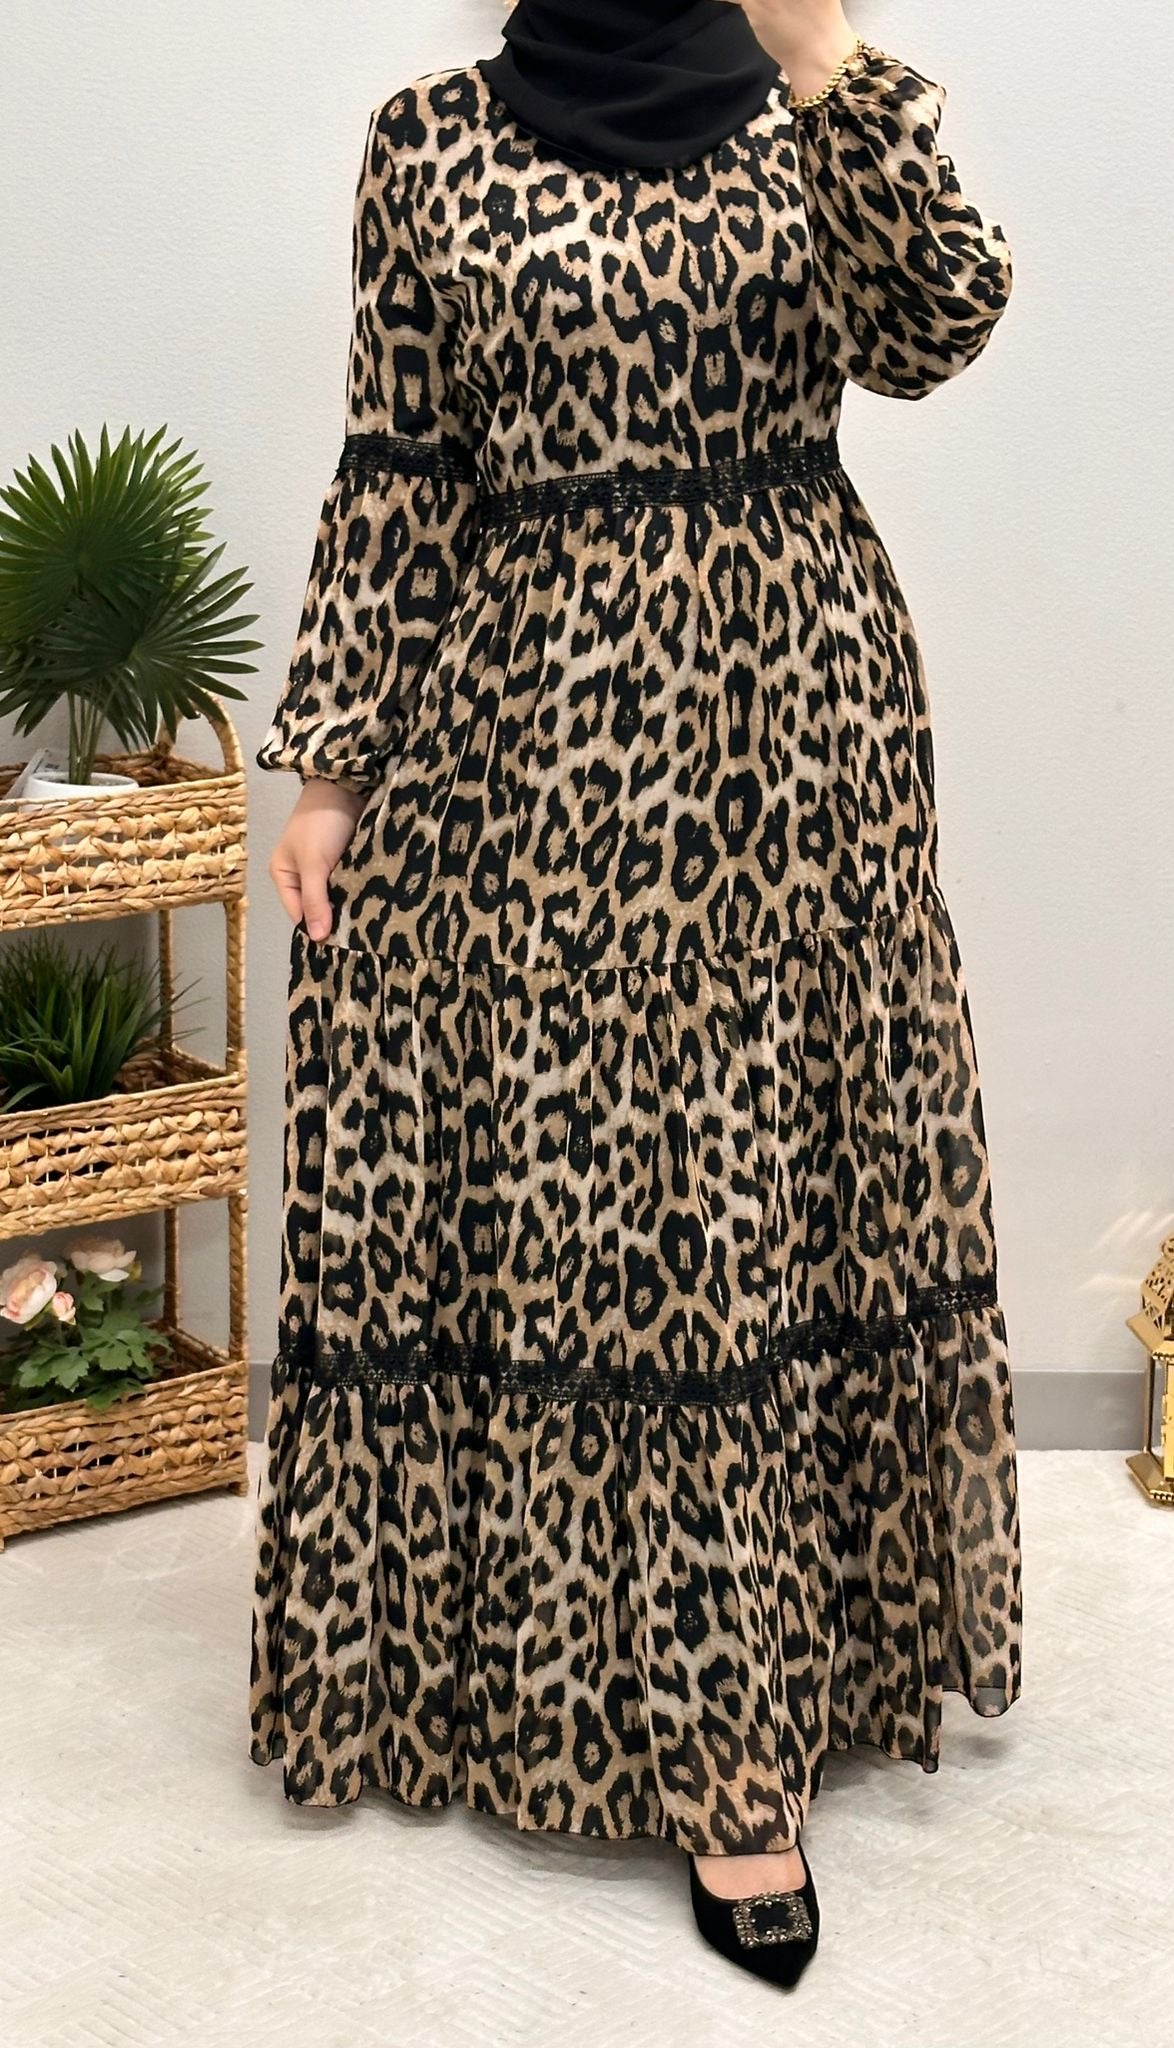 shafon tiger dress